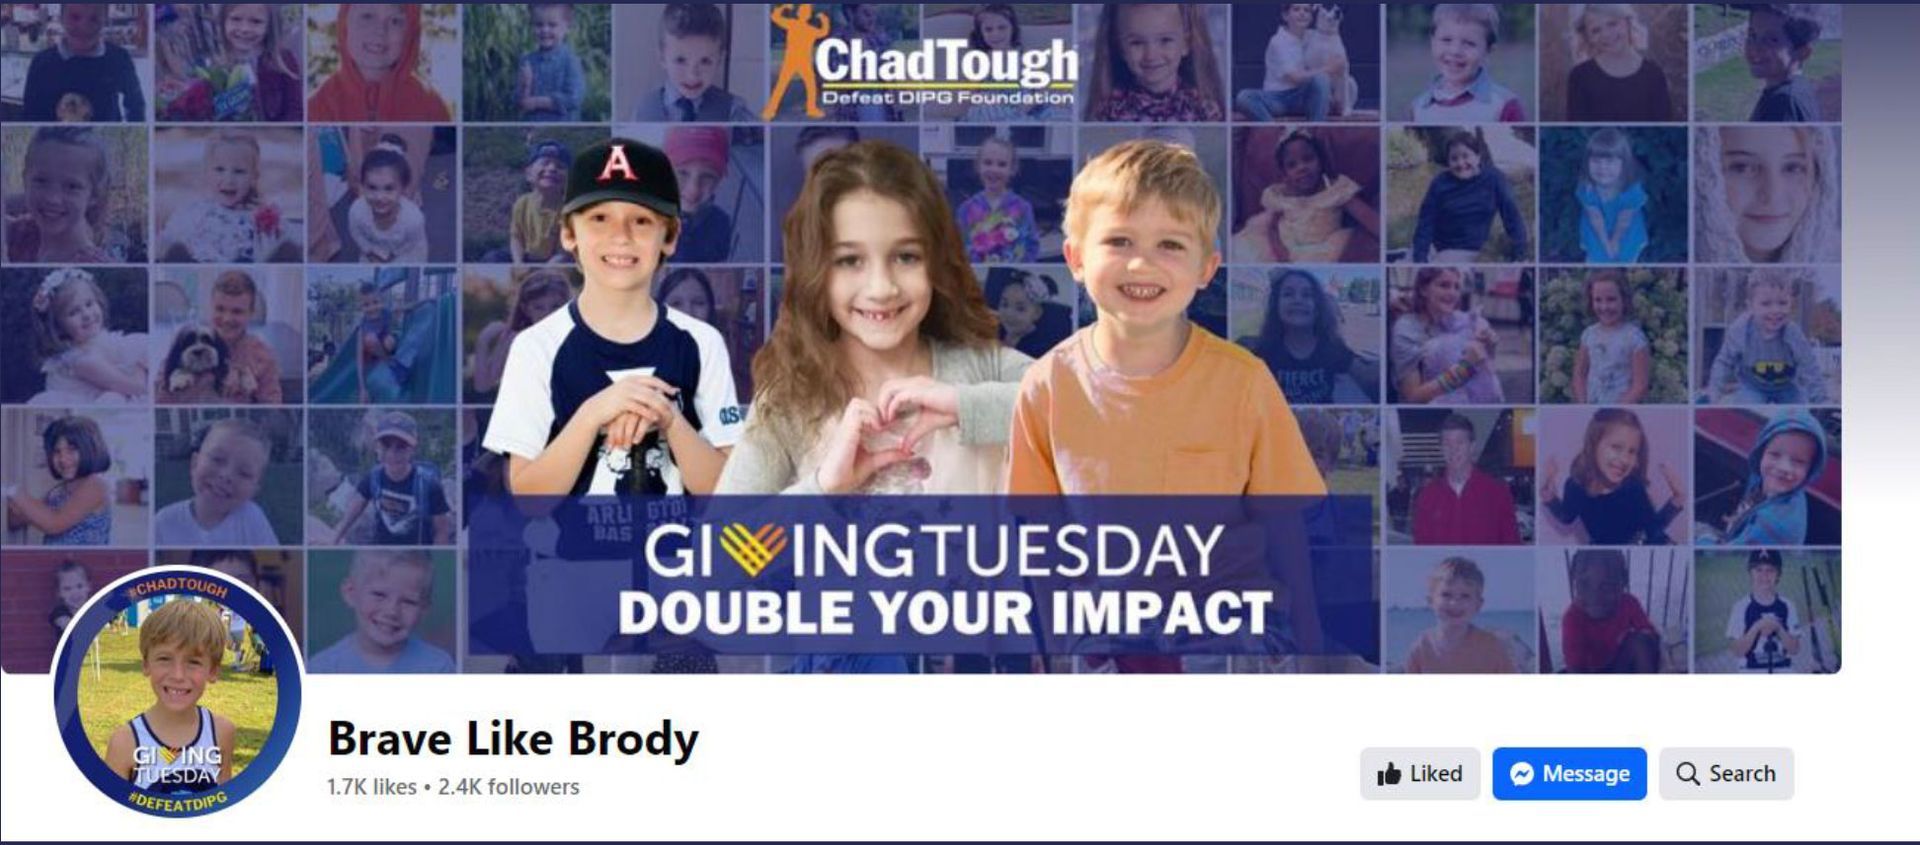 ChadTough - Giving Tuesday